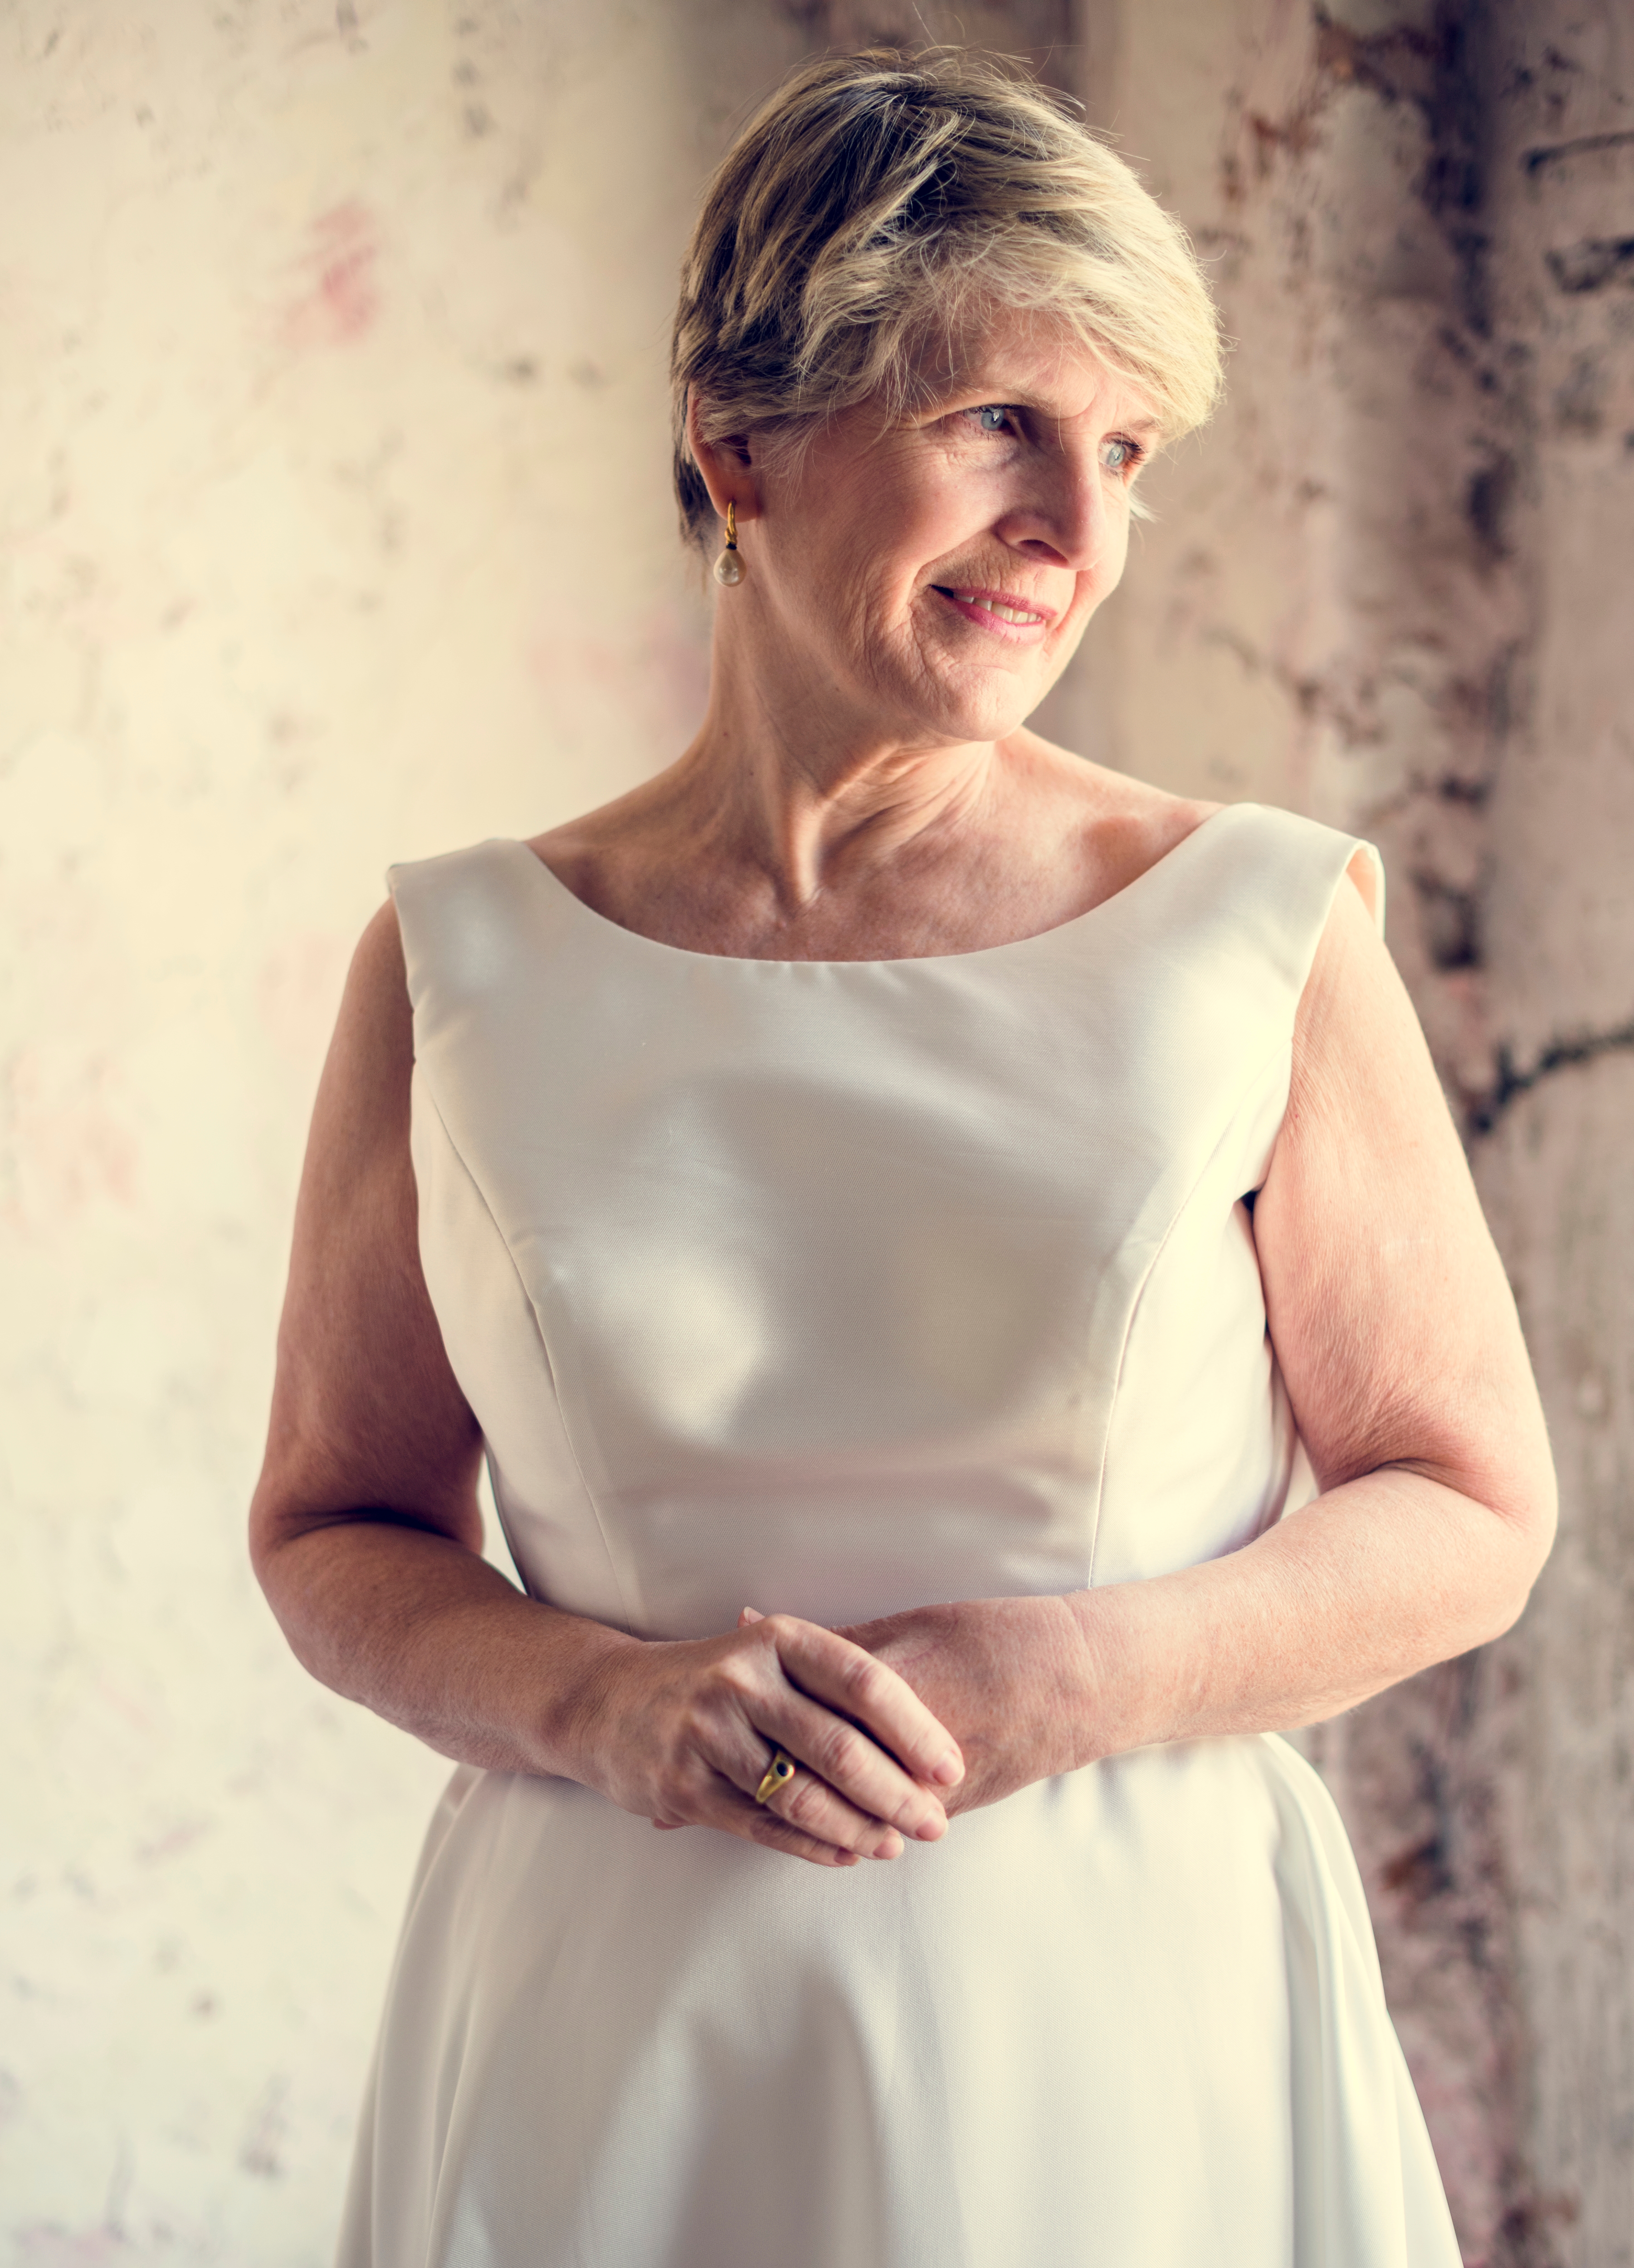 An older woman in a white dress | Source: Shutterstock